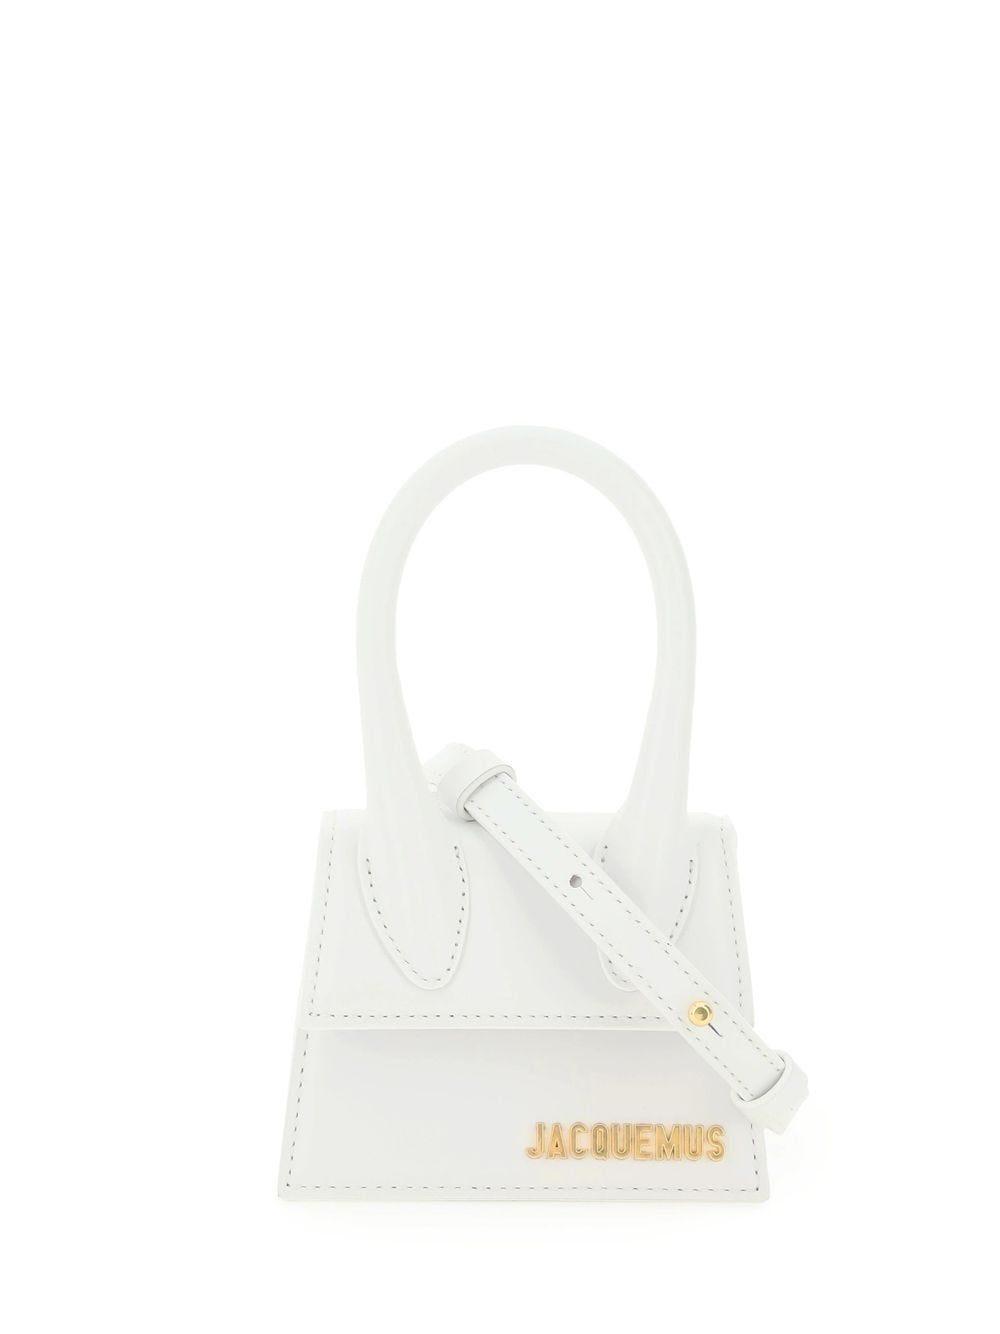 Jacquemus: White 'Le Chiquito' Bag